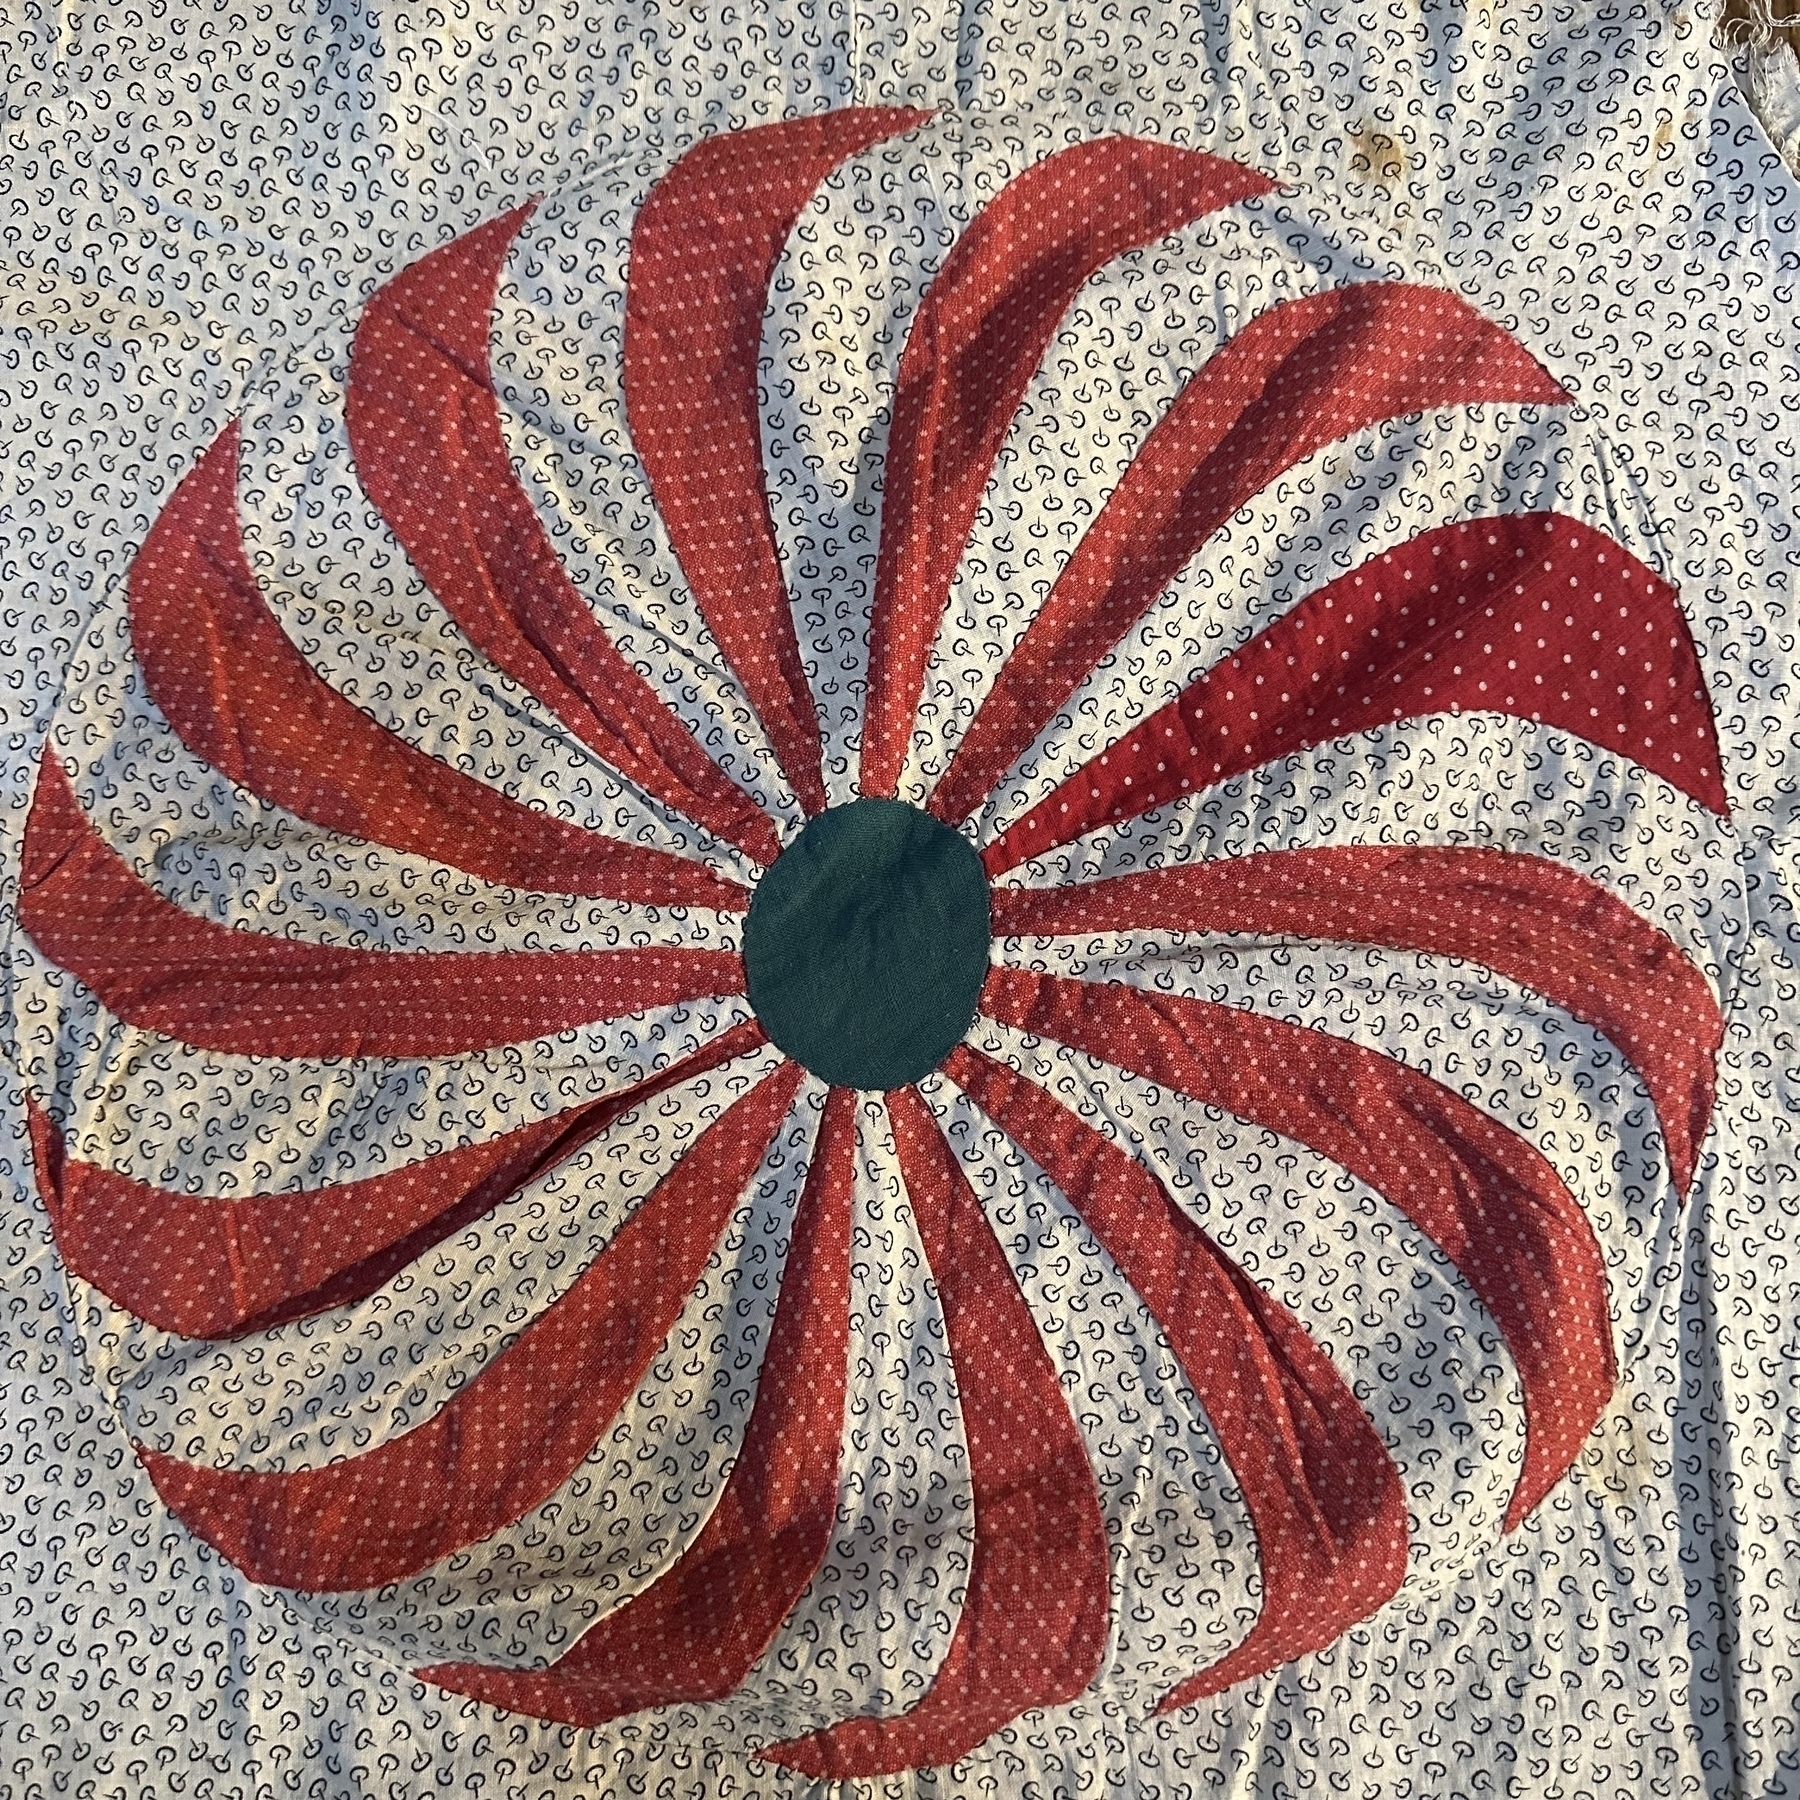 Mom’s hand sewn quilt piece, pinwheel design.